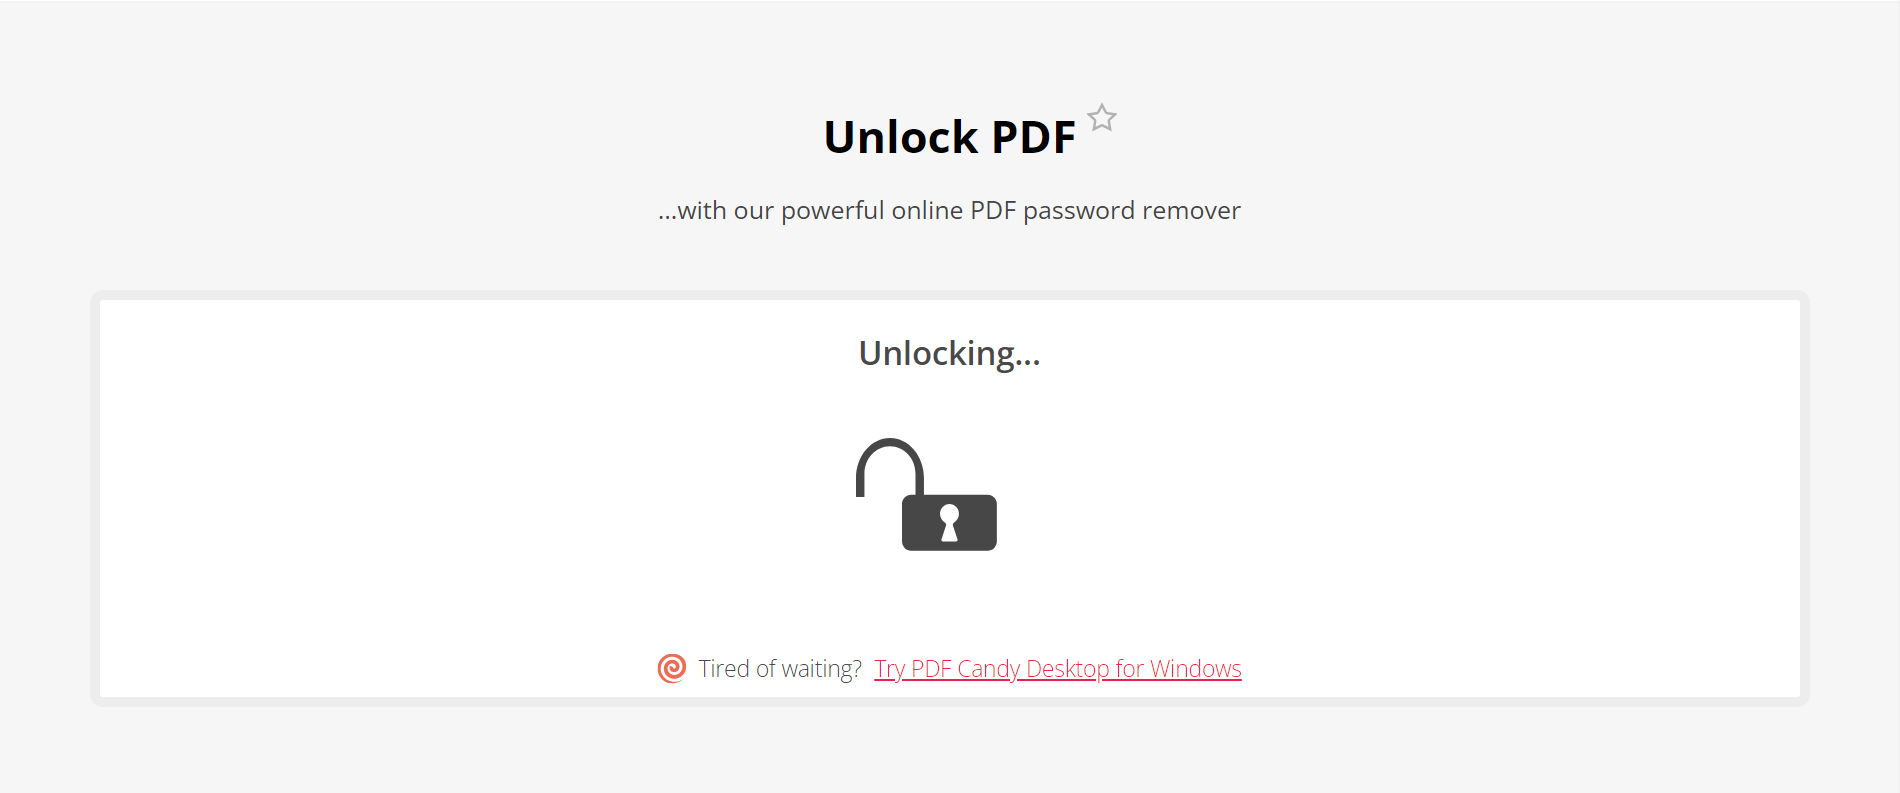 How To Unlock PDF Password Online: Step 3